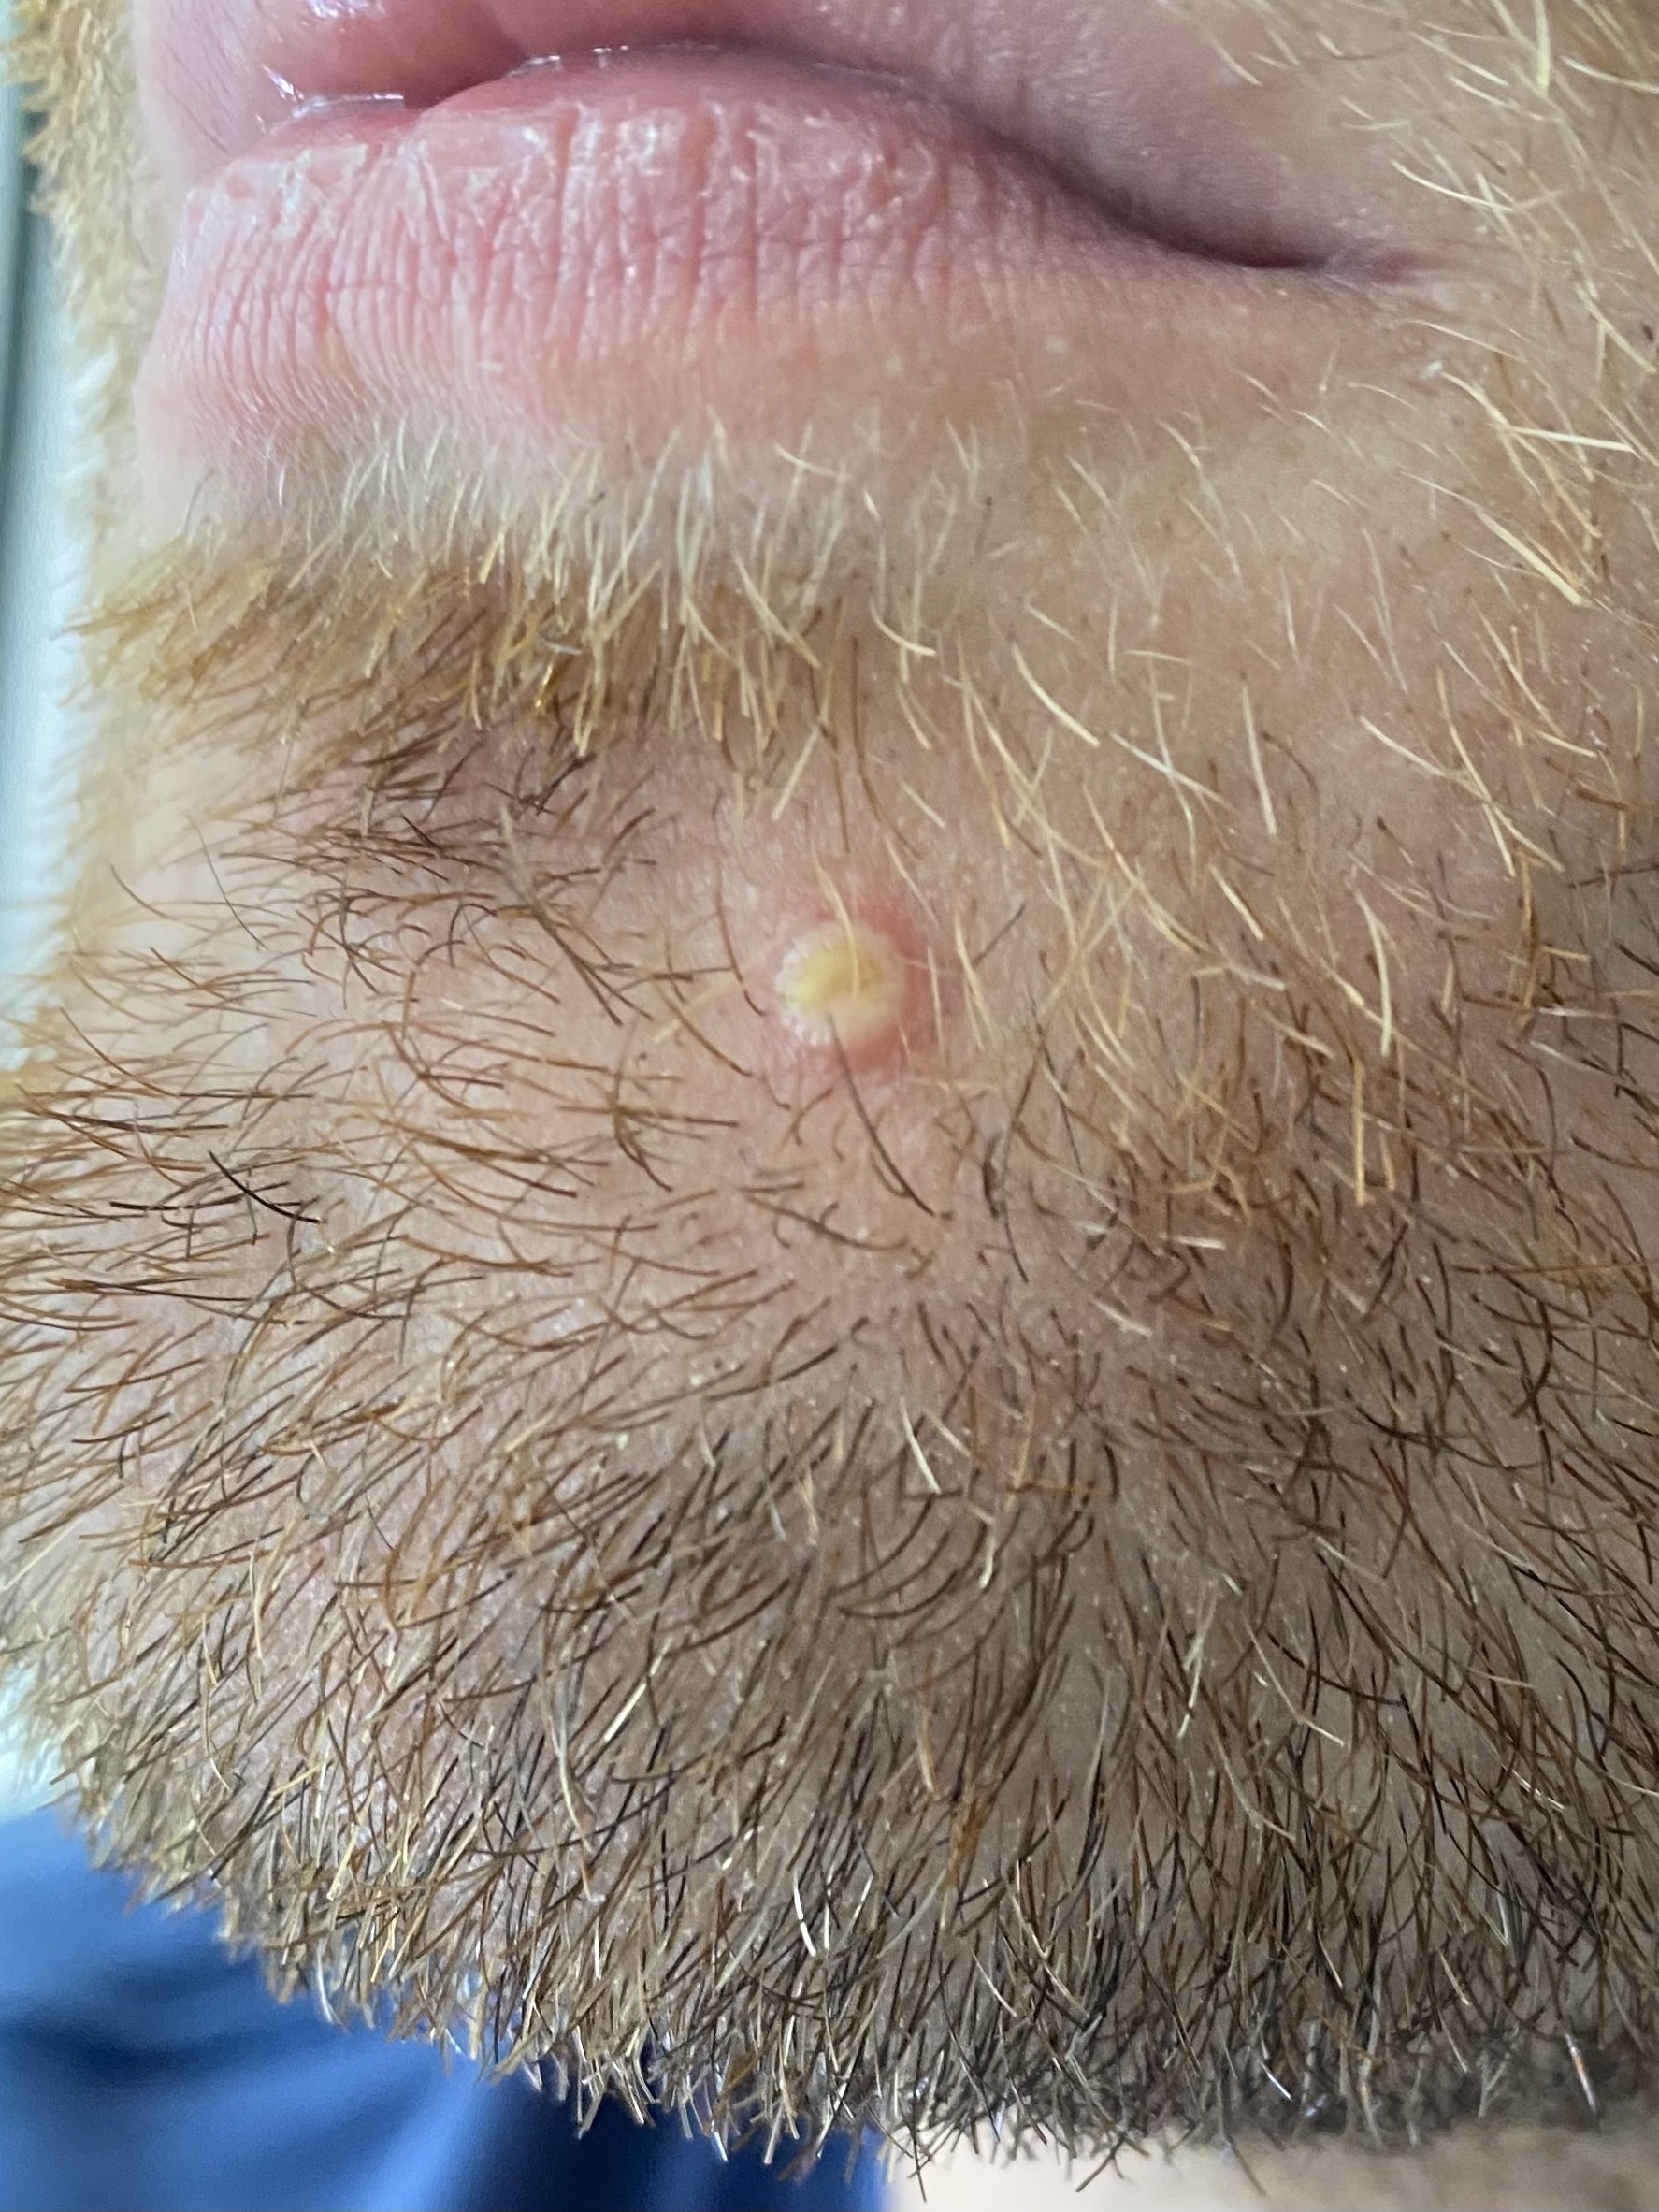 Una de las lesiones de la viruela en la cara de Matt Ford (foto: Twitter @JMatthiasFord)